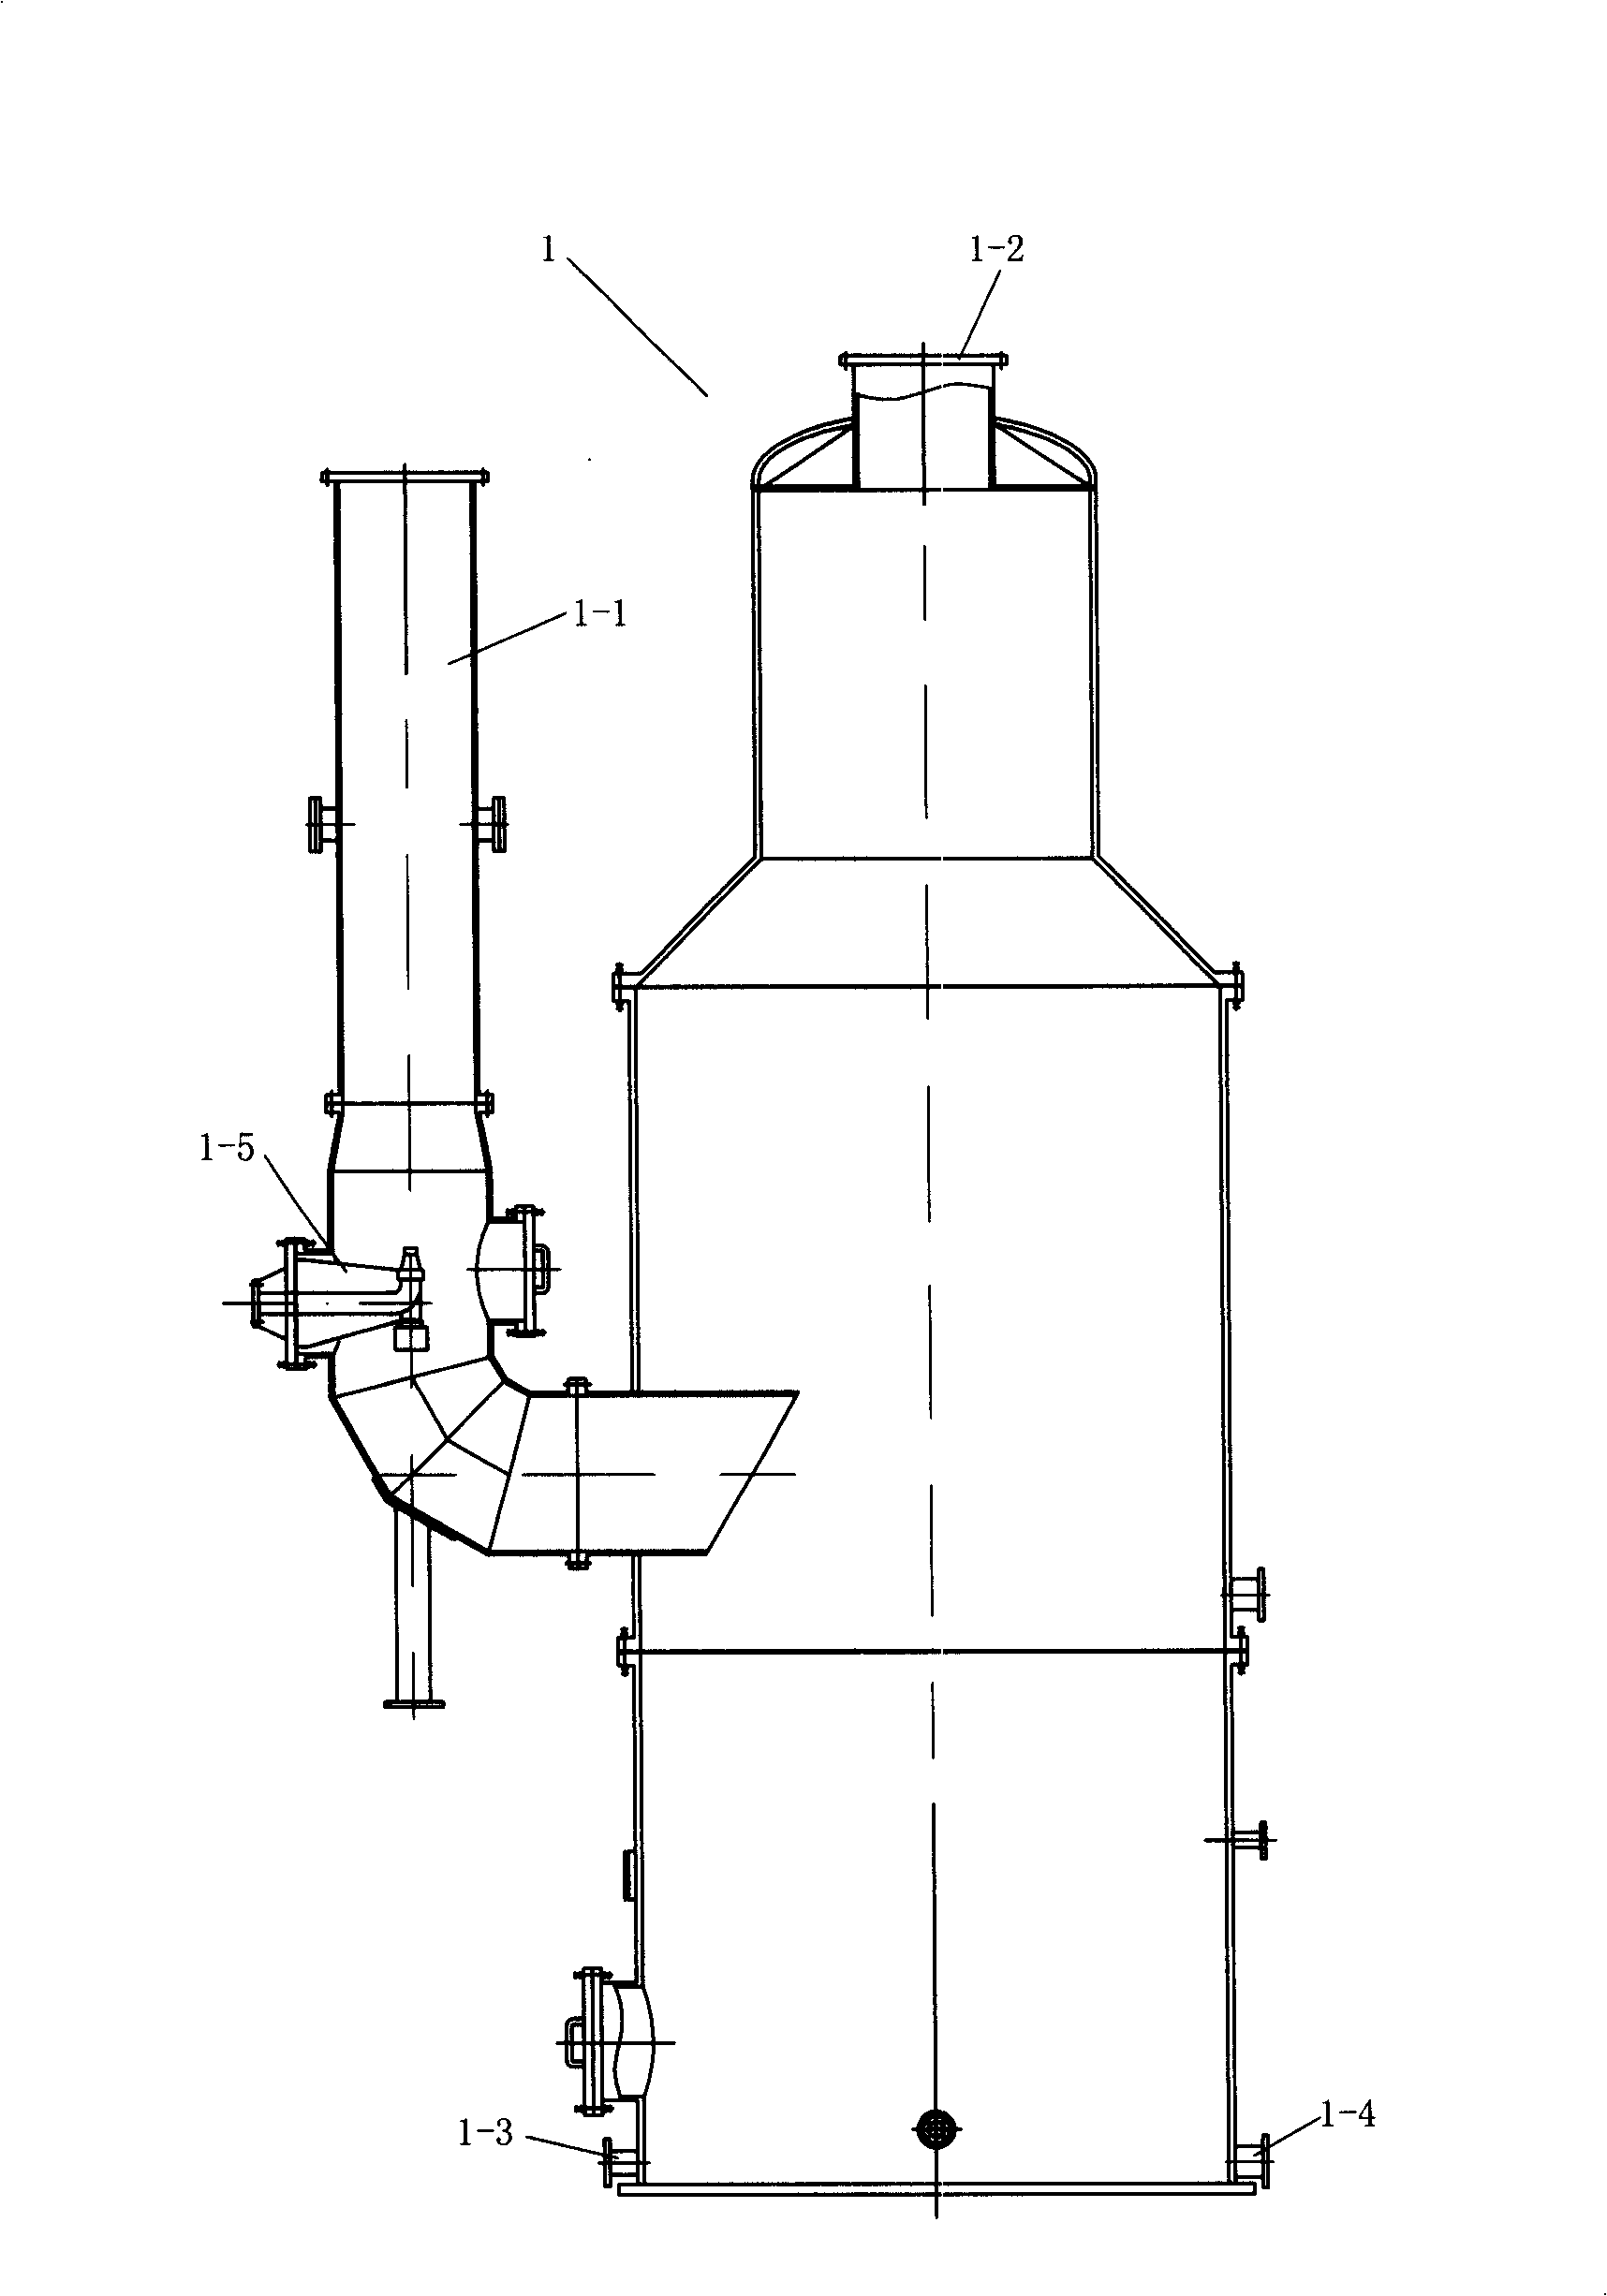 Waste gas treatment system